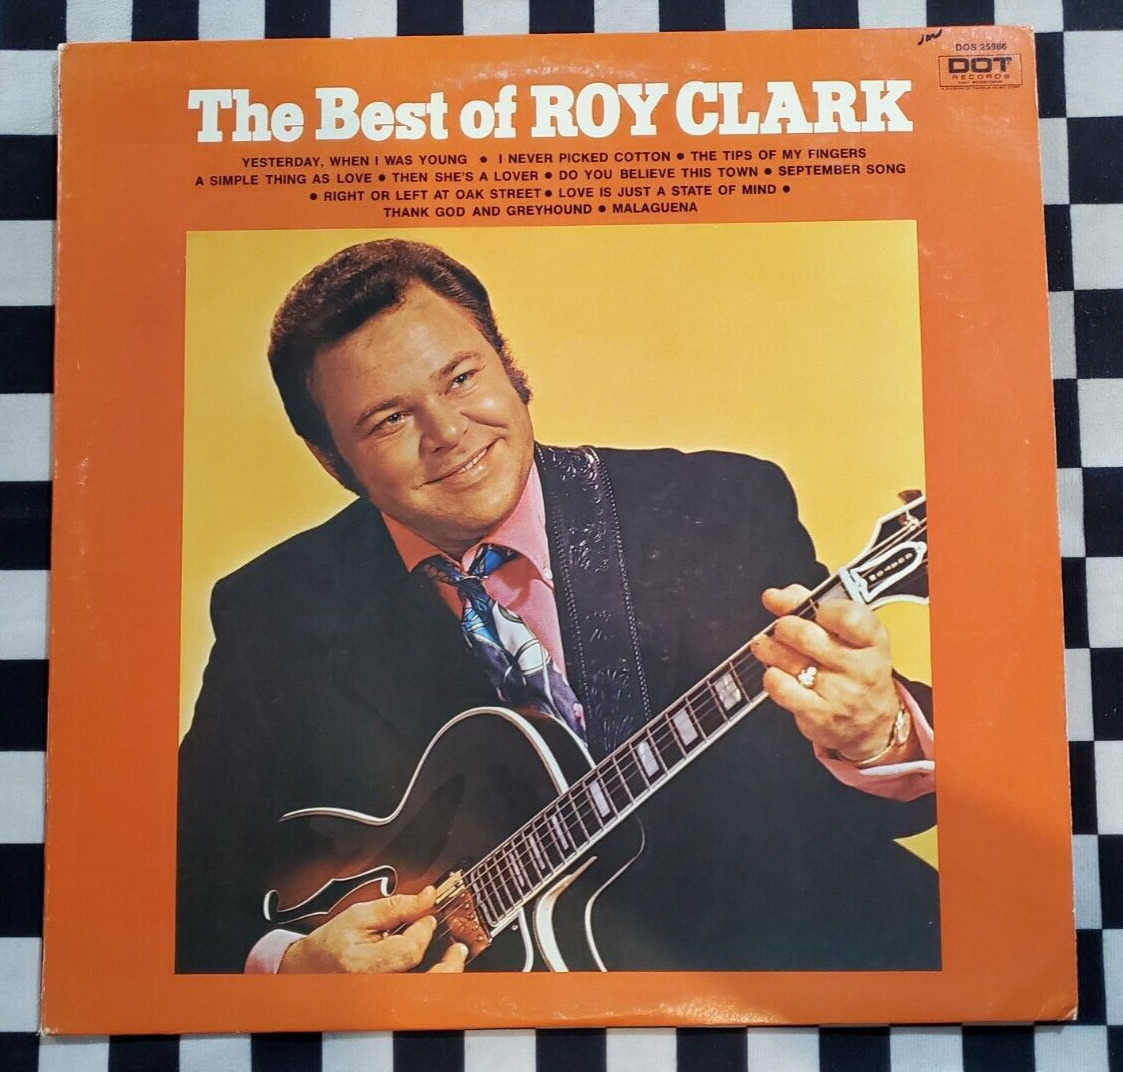 The Best Of Roy Clark LP by Roy Clark vinyl 1971 VG+ DOS25986 Dot Records